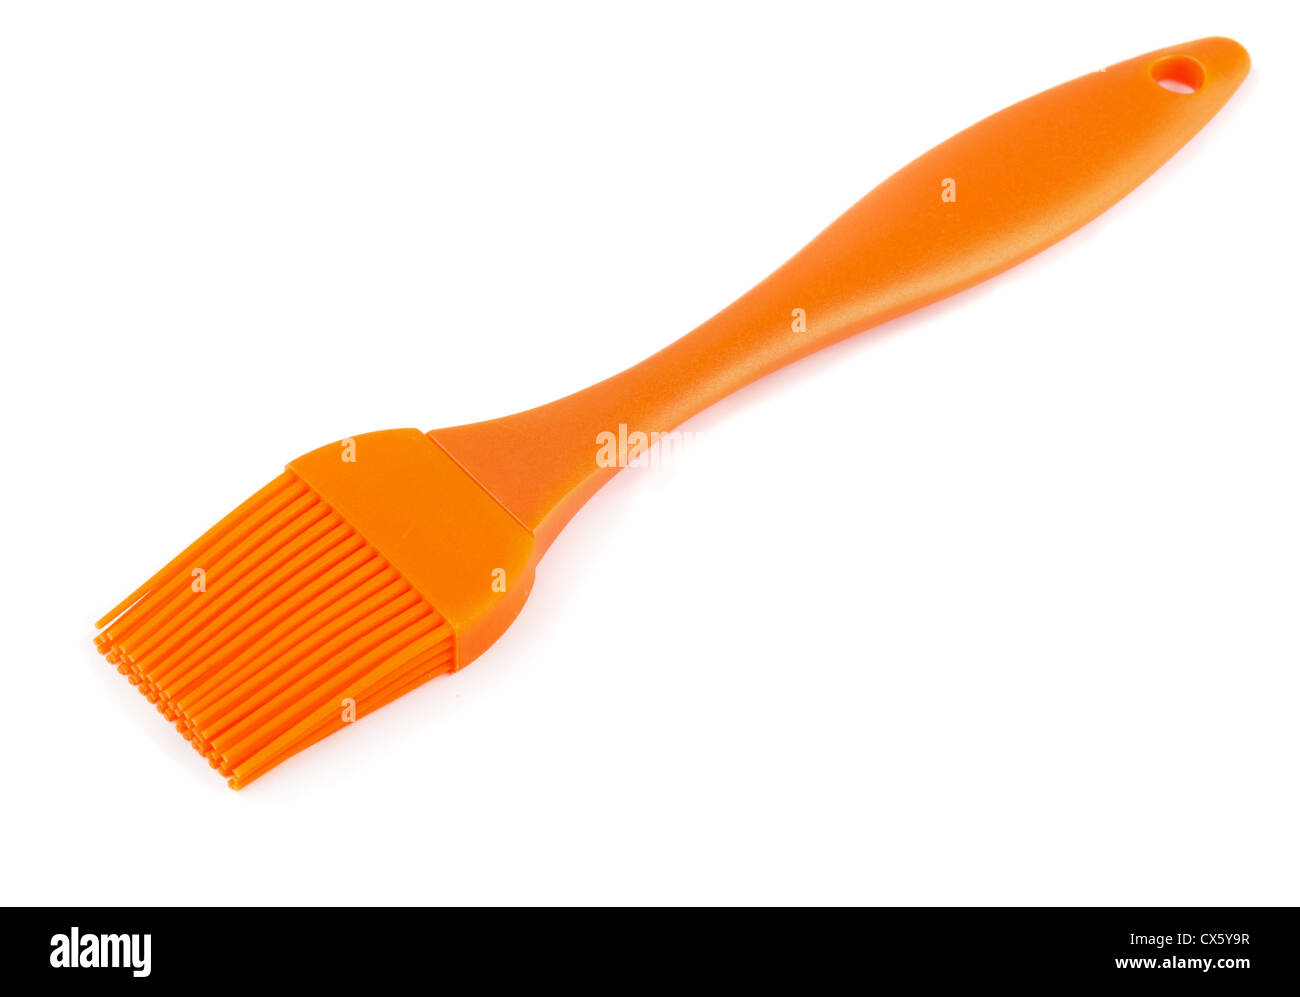 Brocha de silicona naranja aislado en blanco Foto de stock